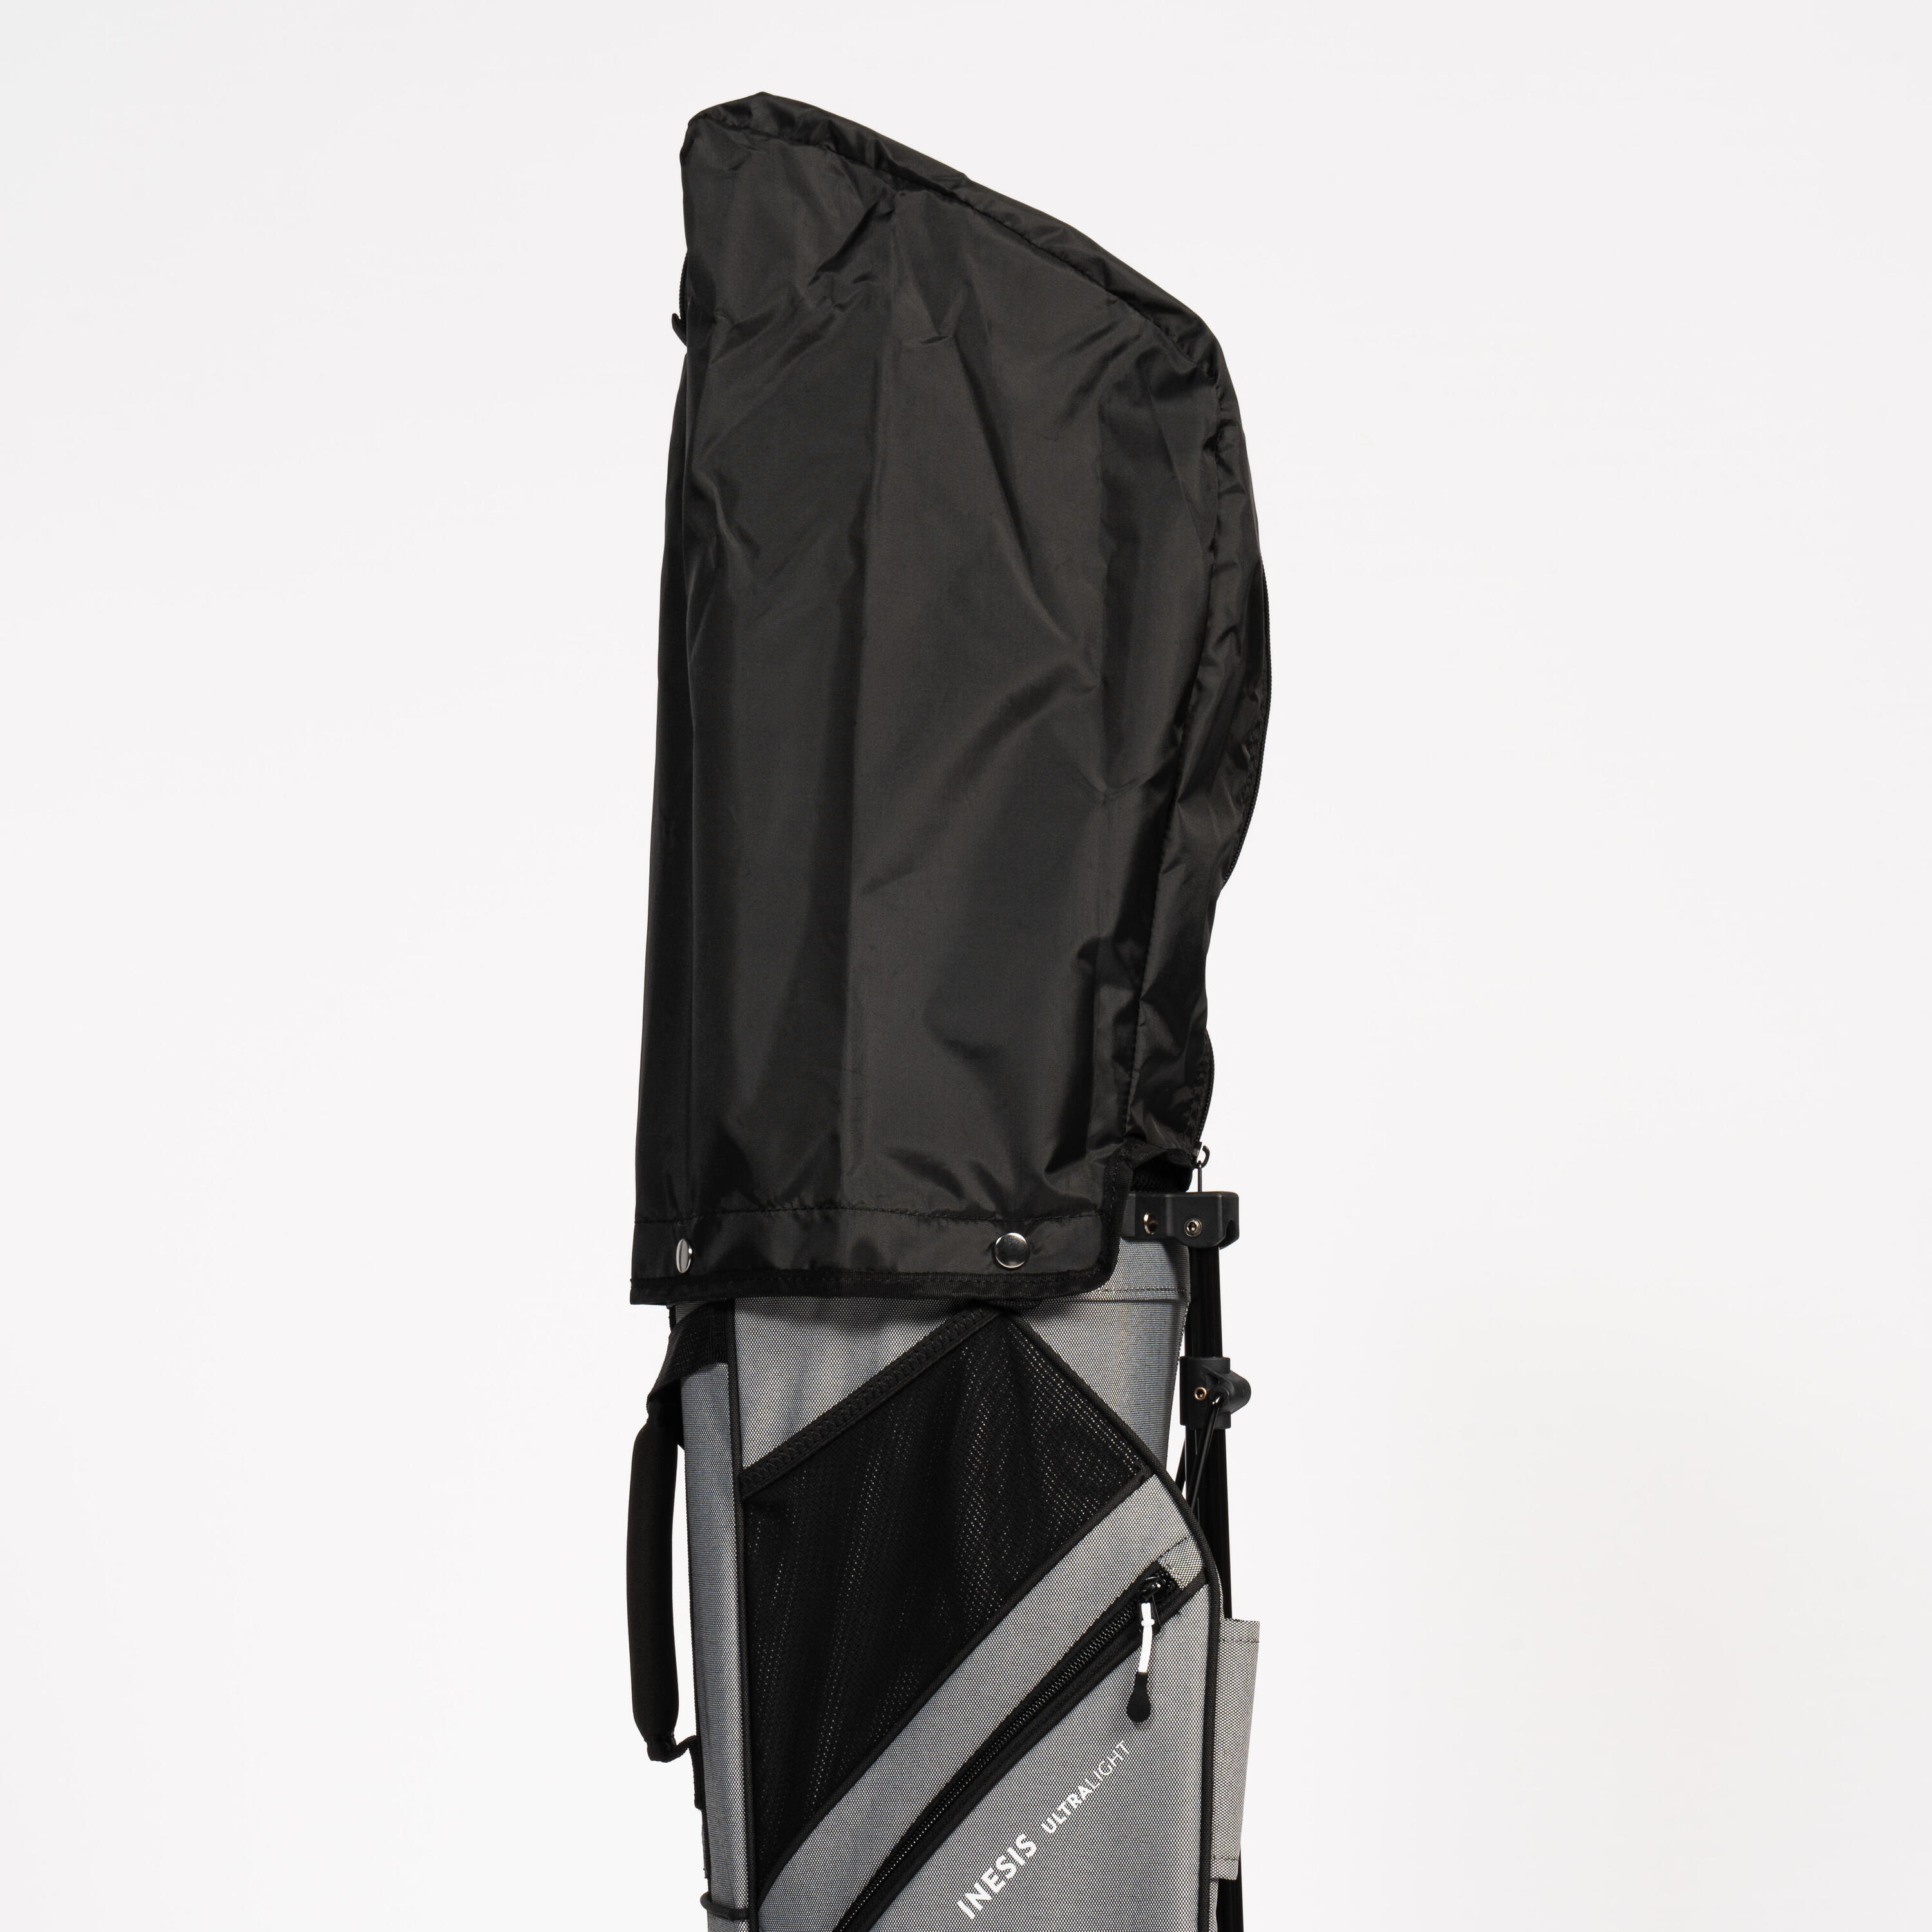 Golf stand bag - INESIS Ultralight grey 7/10